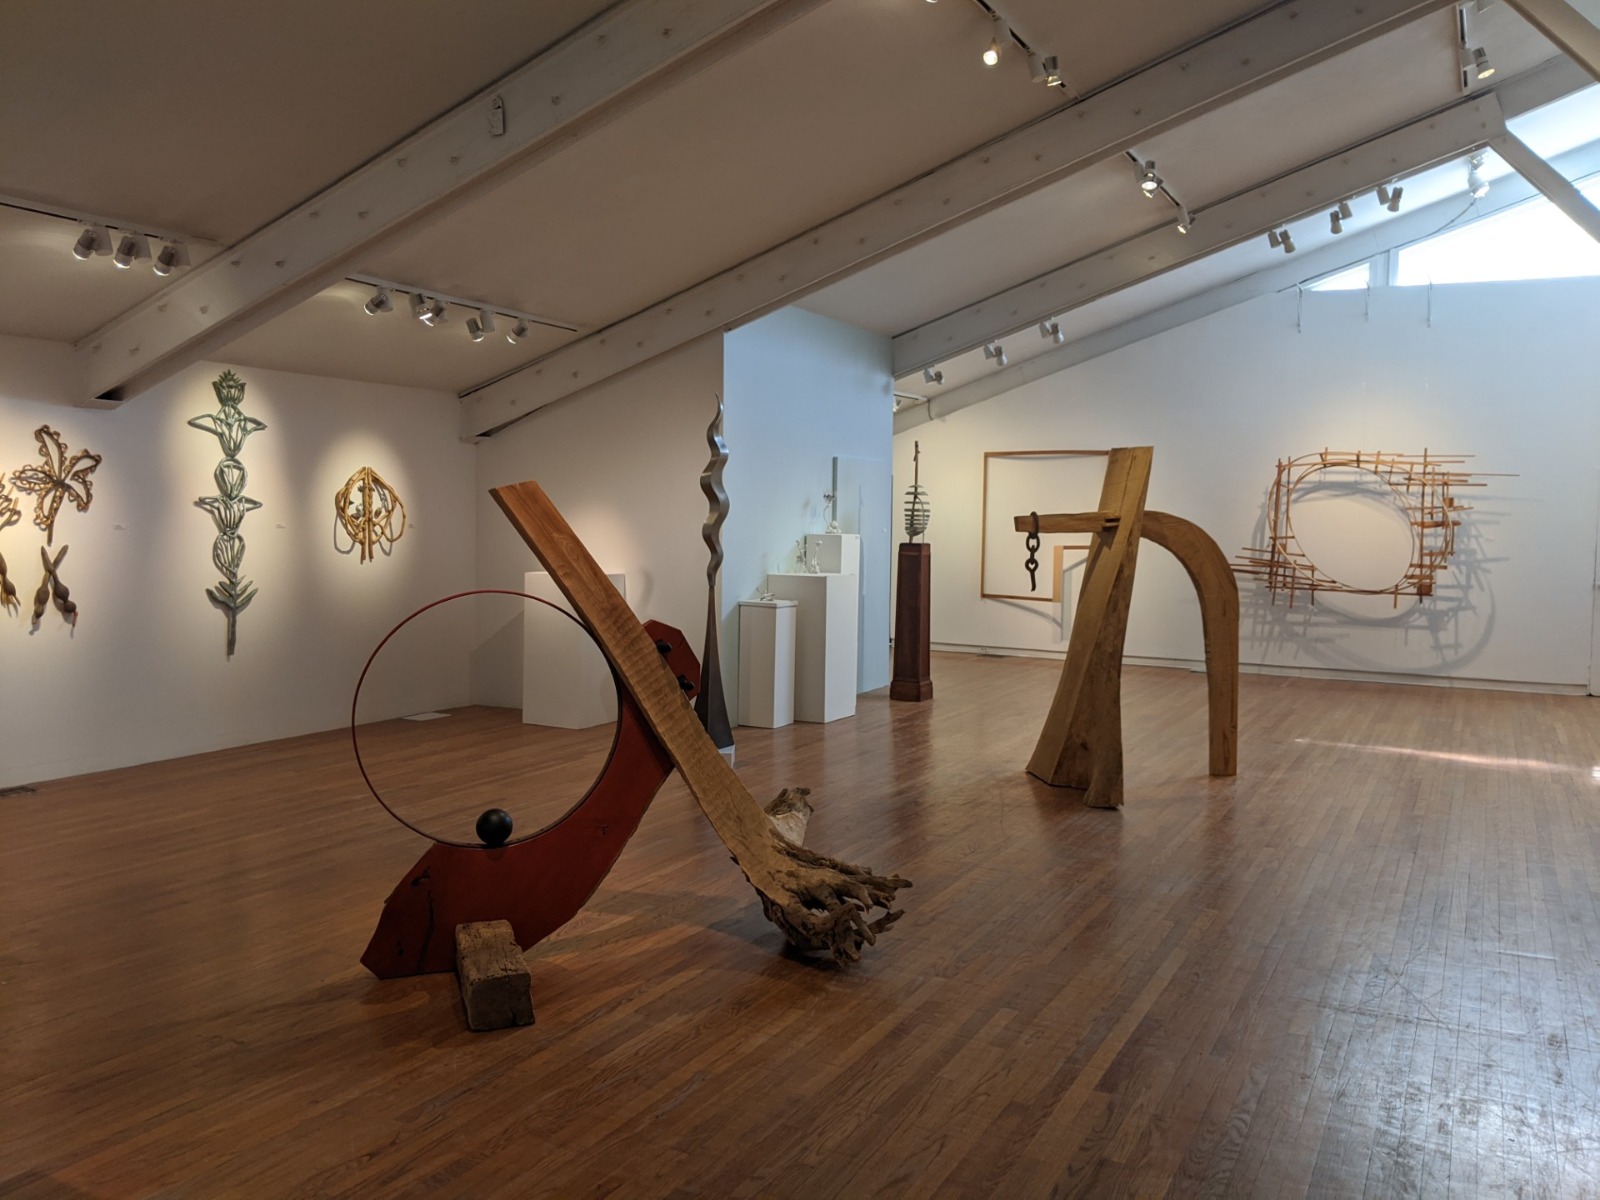 Artists’ Talk & Walk Through Taking Form: Contemporary Sculpture